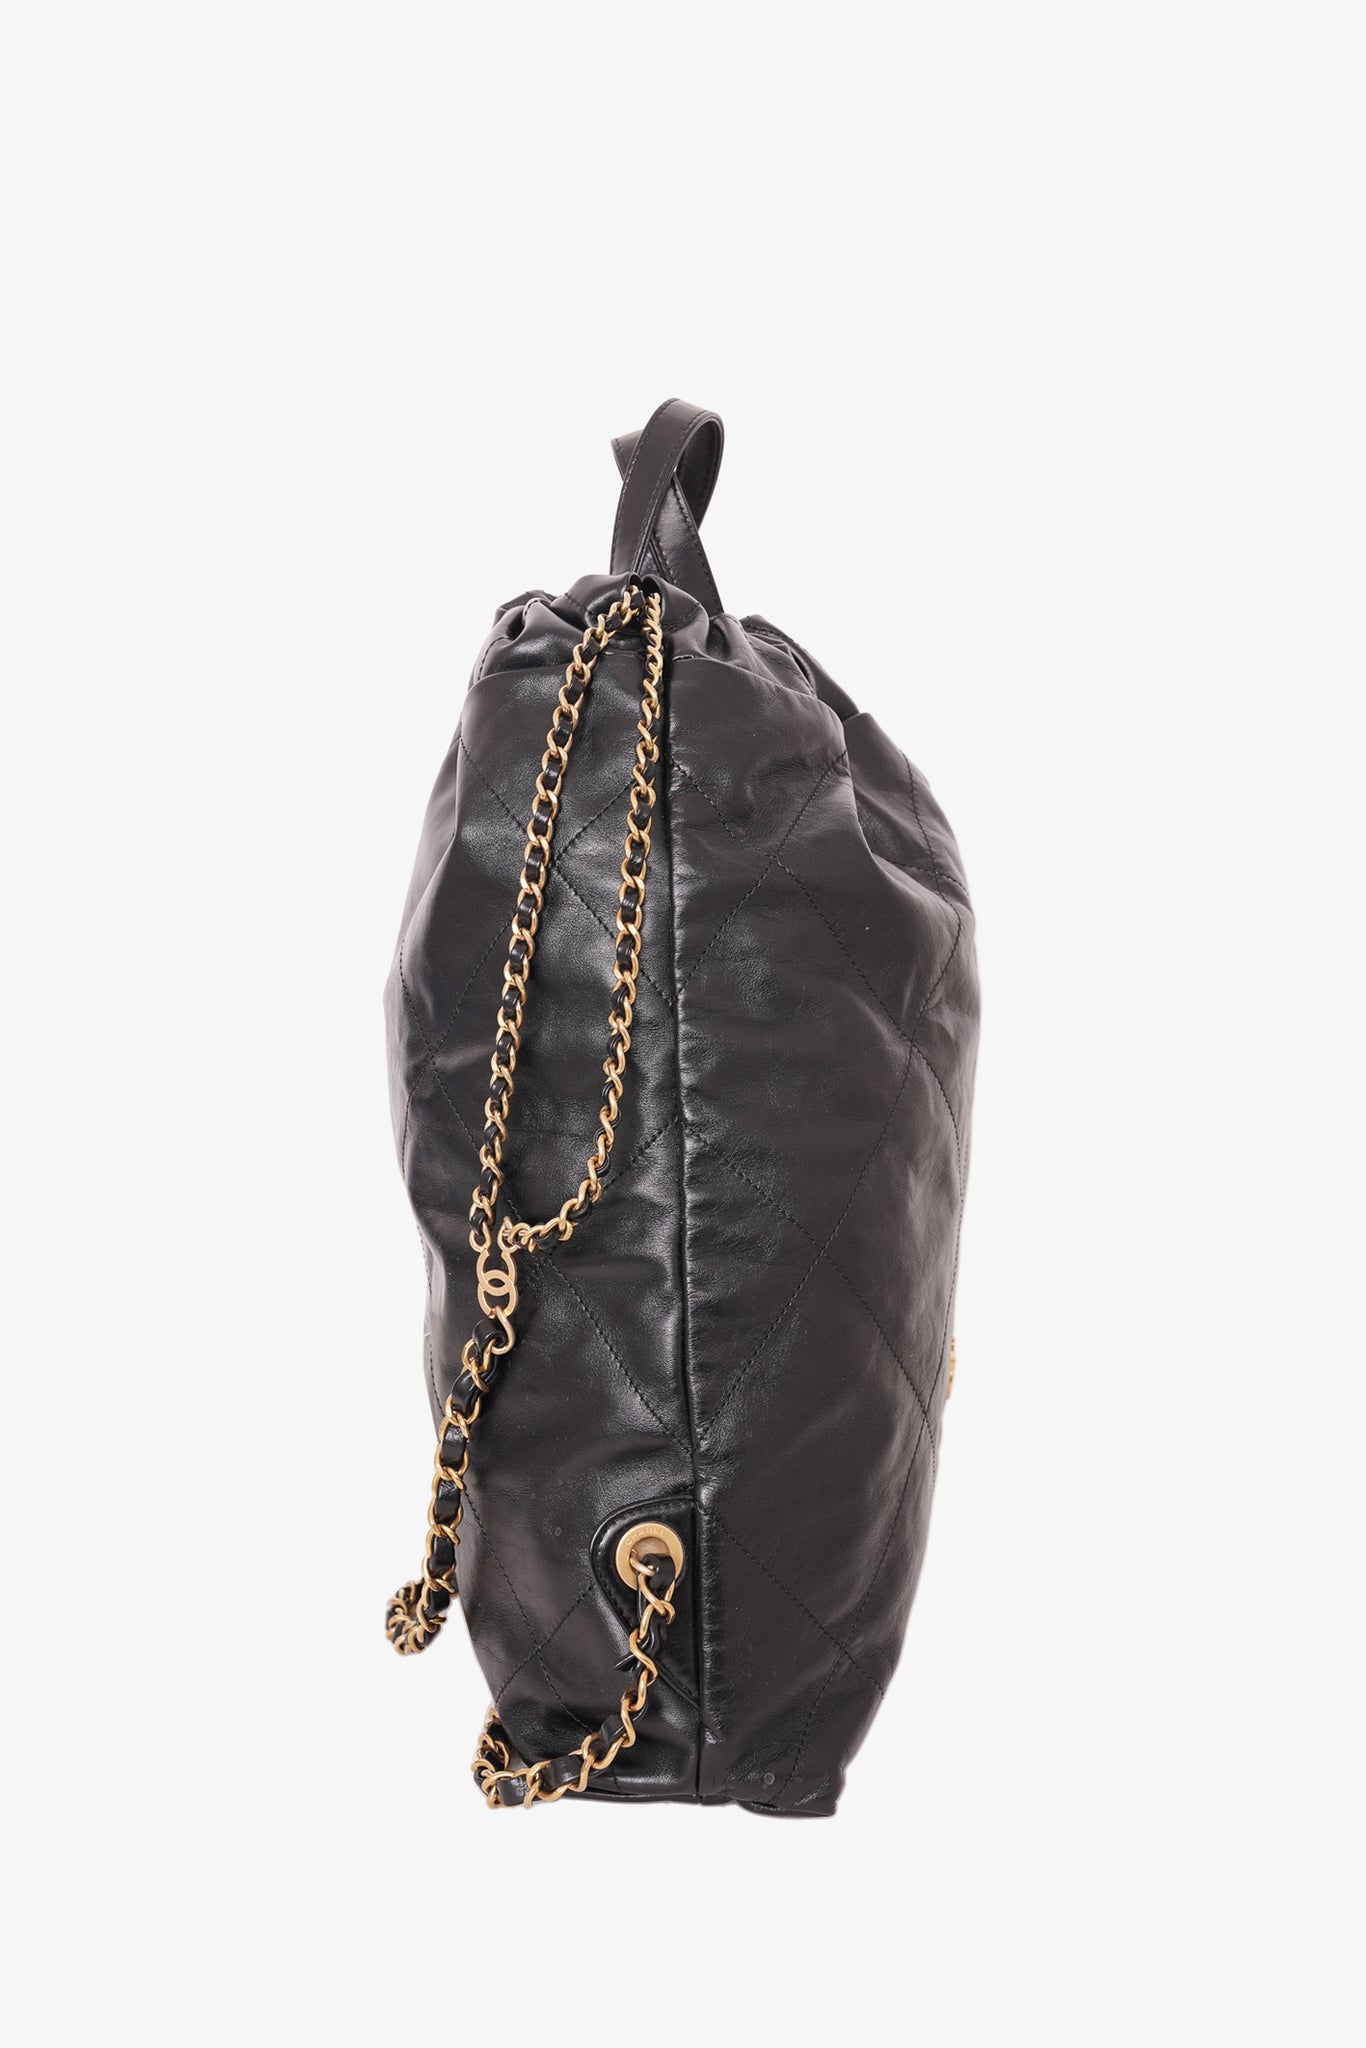 Chanel 2022 Black Shiny Calfskin 22 Backpack